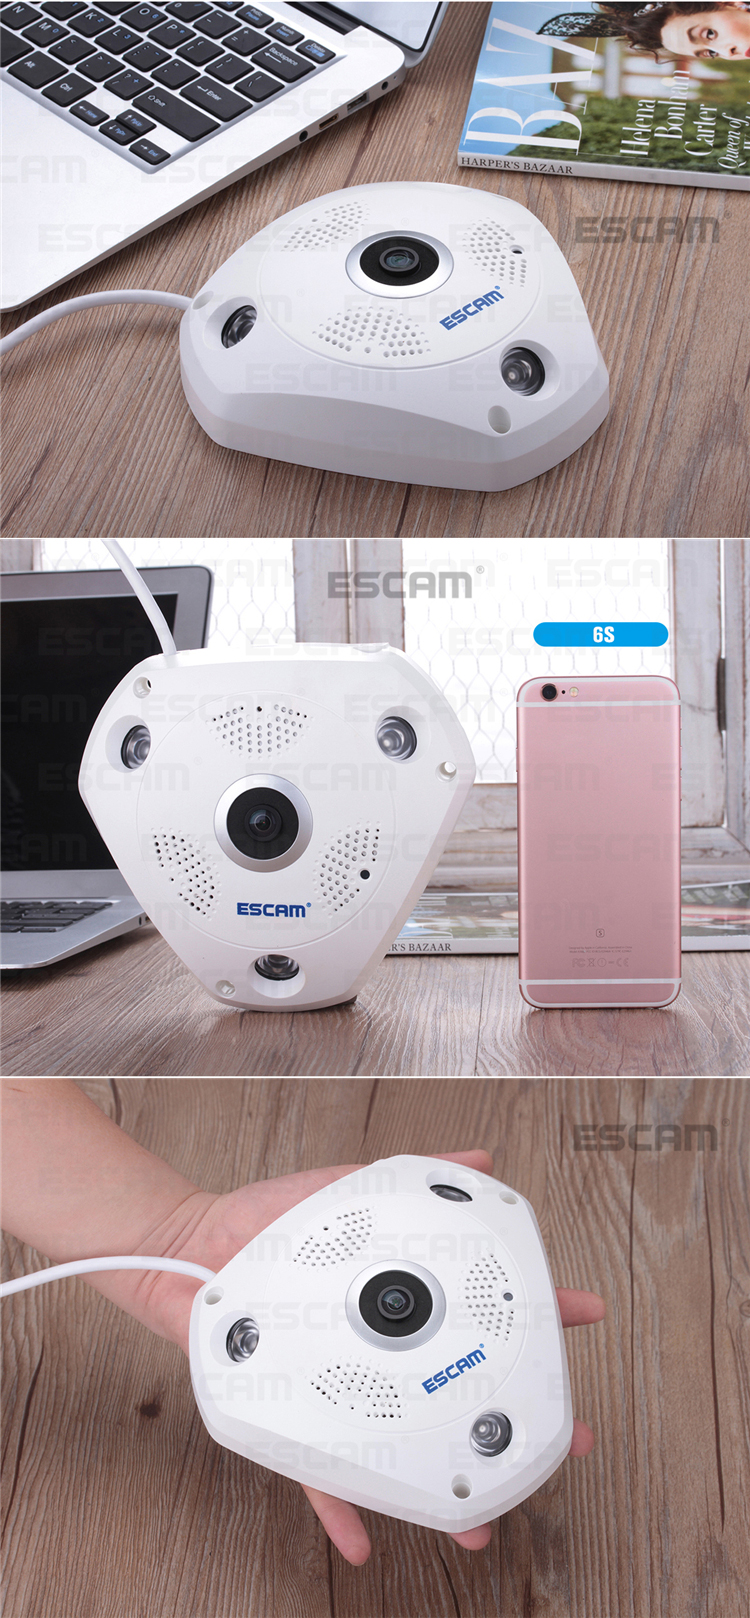 ESCAM-Fisheye-Camera-Support-VR-QP180-Shark-960P-IP-WiFi-Camera-13MP-360-Degree-Panoramic-Infrared-N-1083170-9